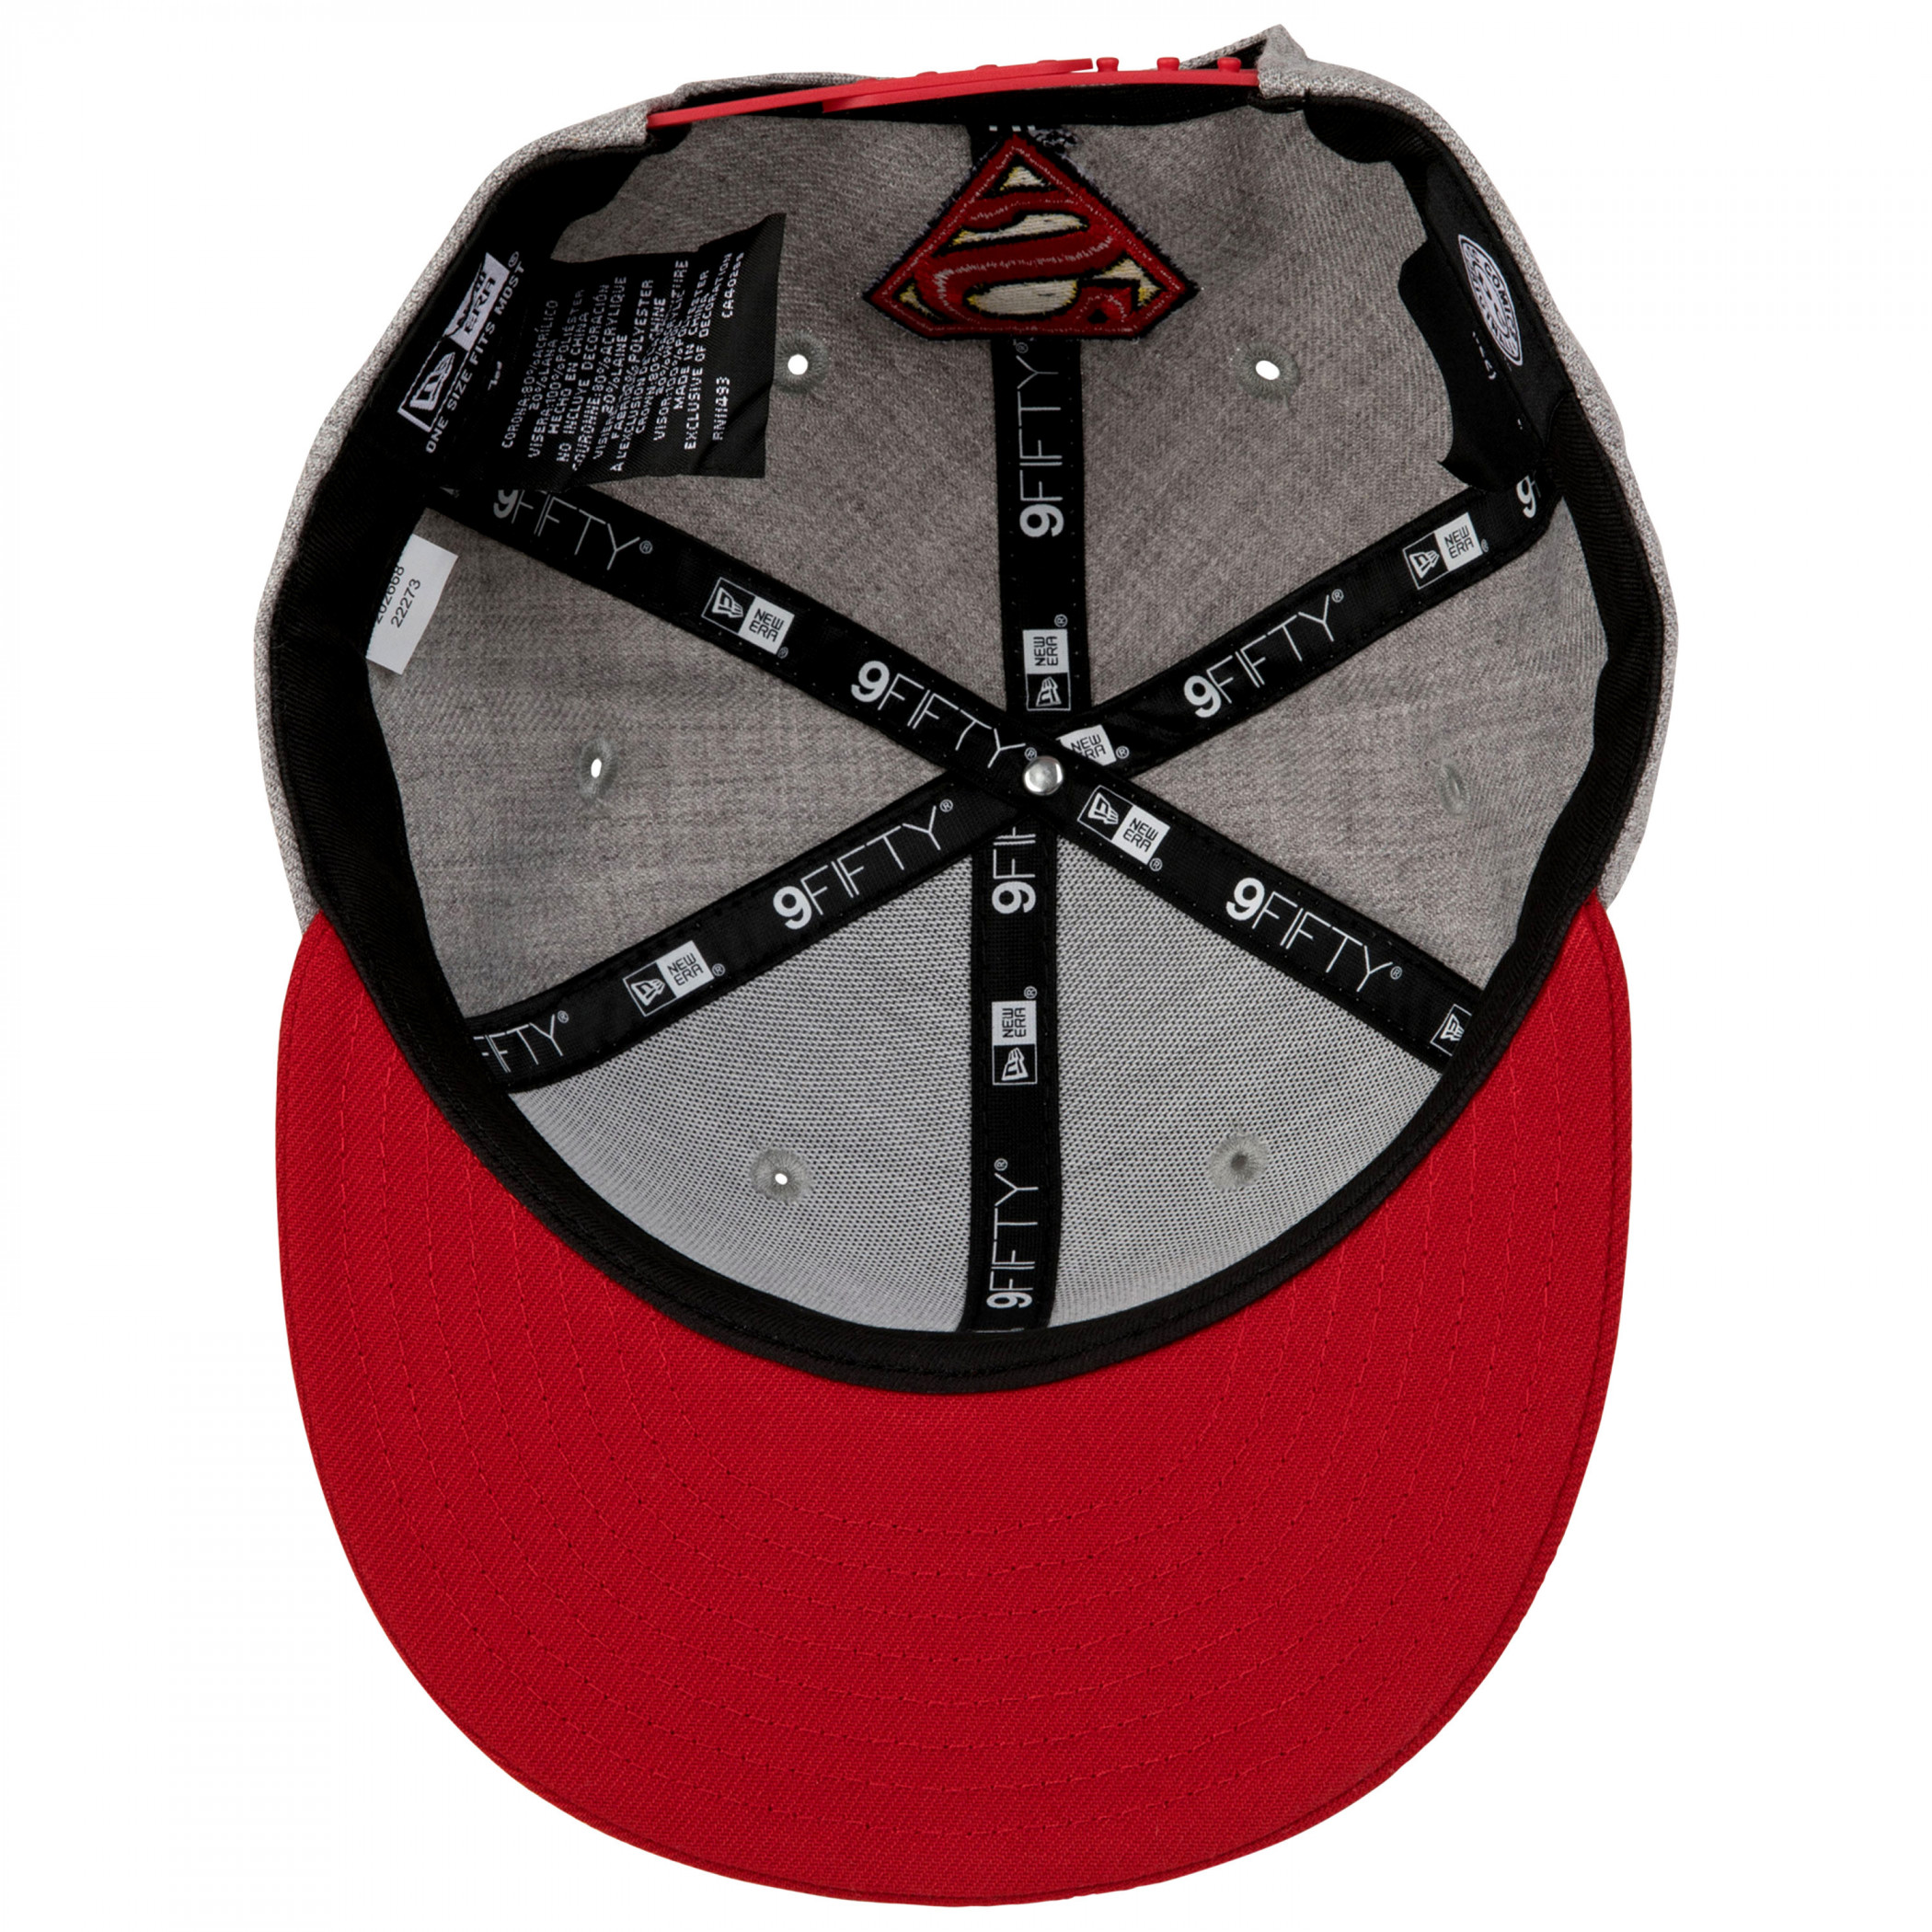 The Flash Symbol Heathered New Era 9Fifty Adjustable Hat